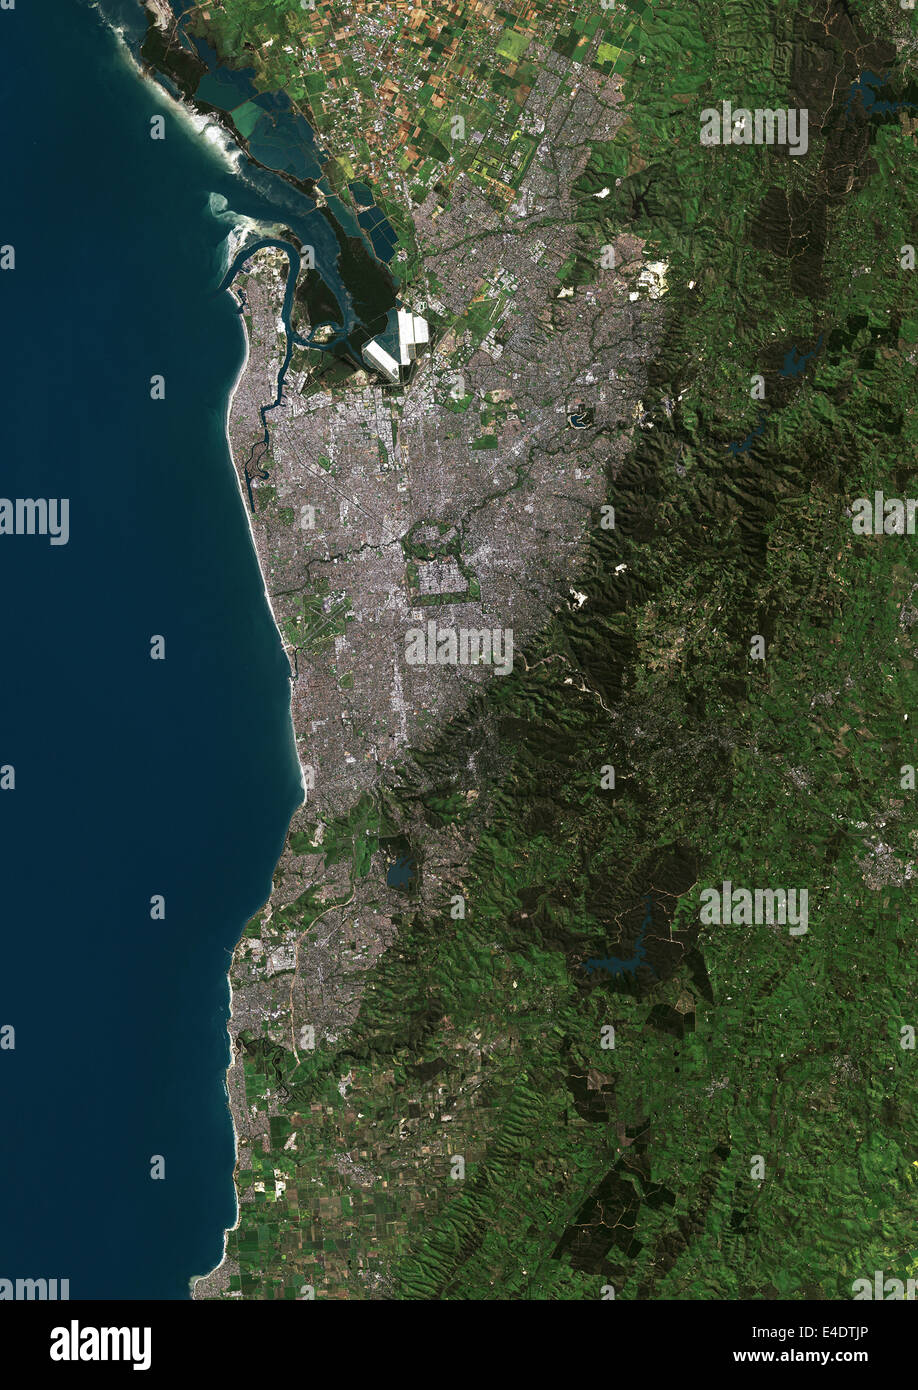 Adelaide, Australien, Echtfarben-Satellitenbild. Adelaide, Australien. Echtfarben-Satellitenbild von Adelaide, der Hauptstadt Stockfoto